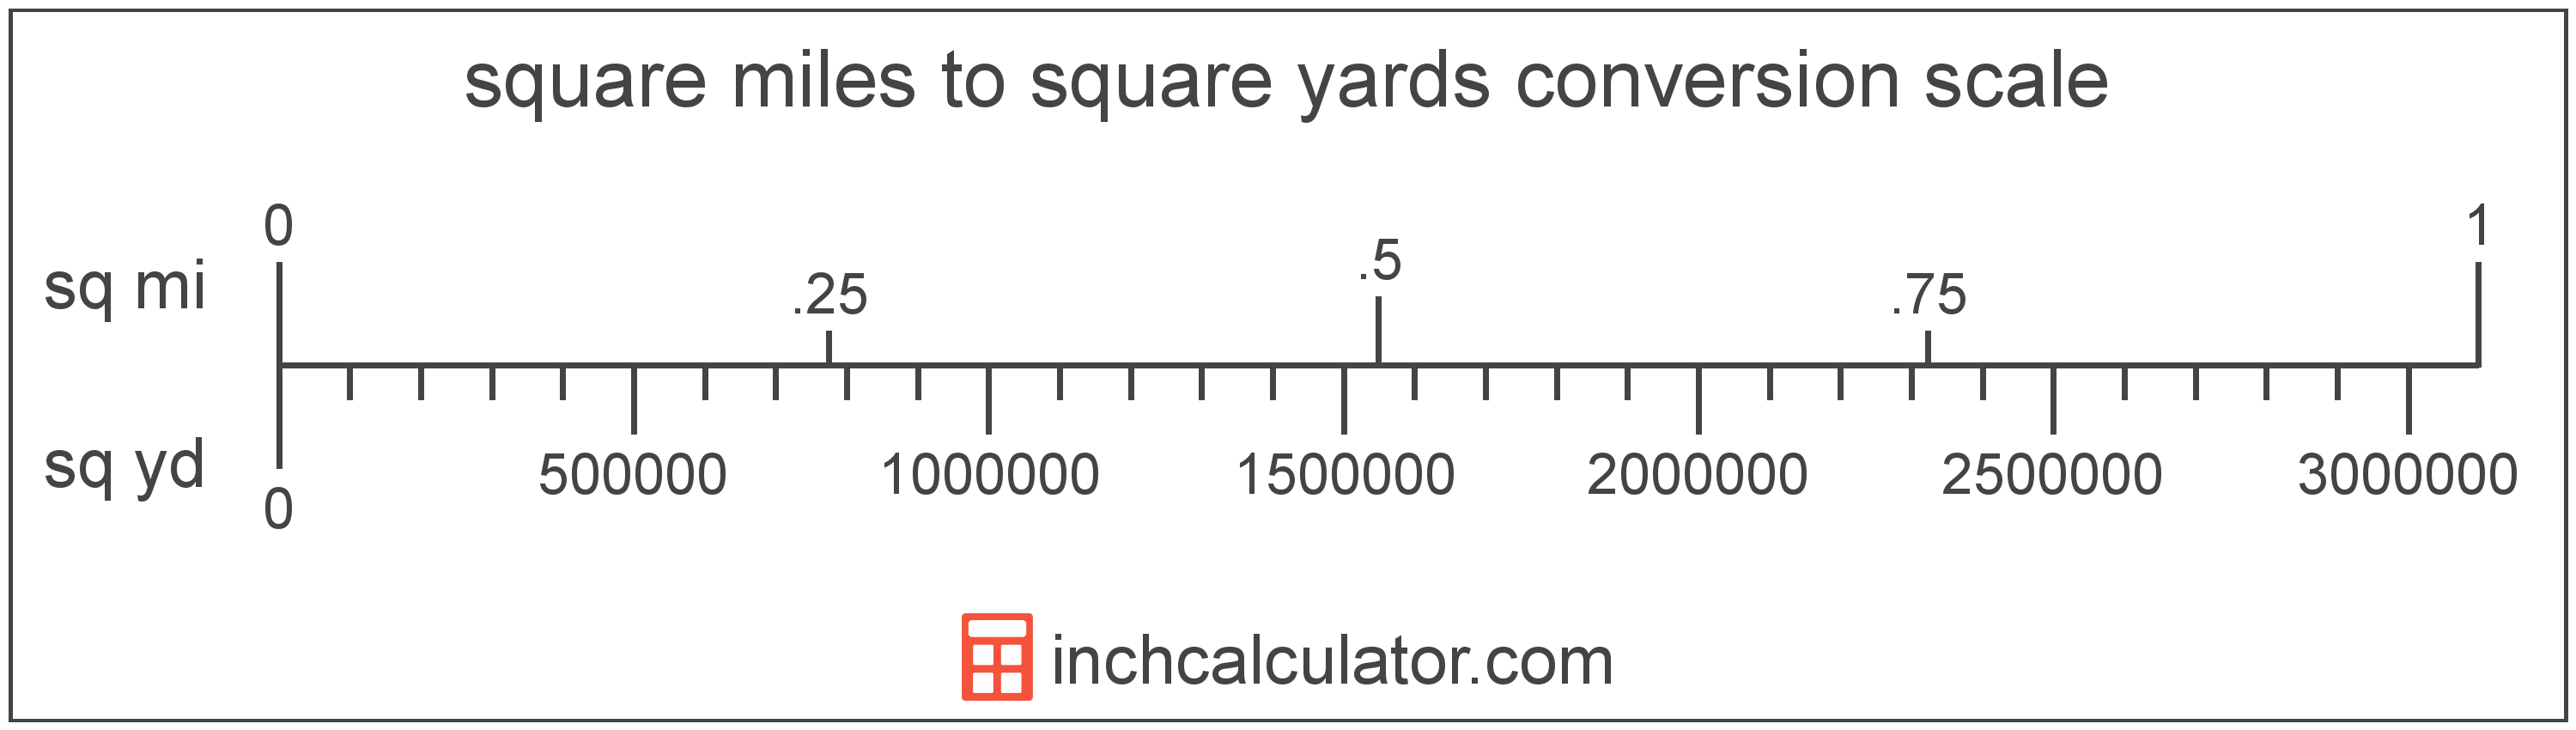 convert-square-miles-to-square-yards-sq-mi-to-sq-yd